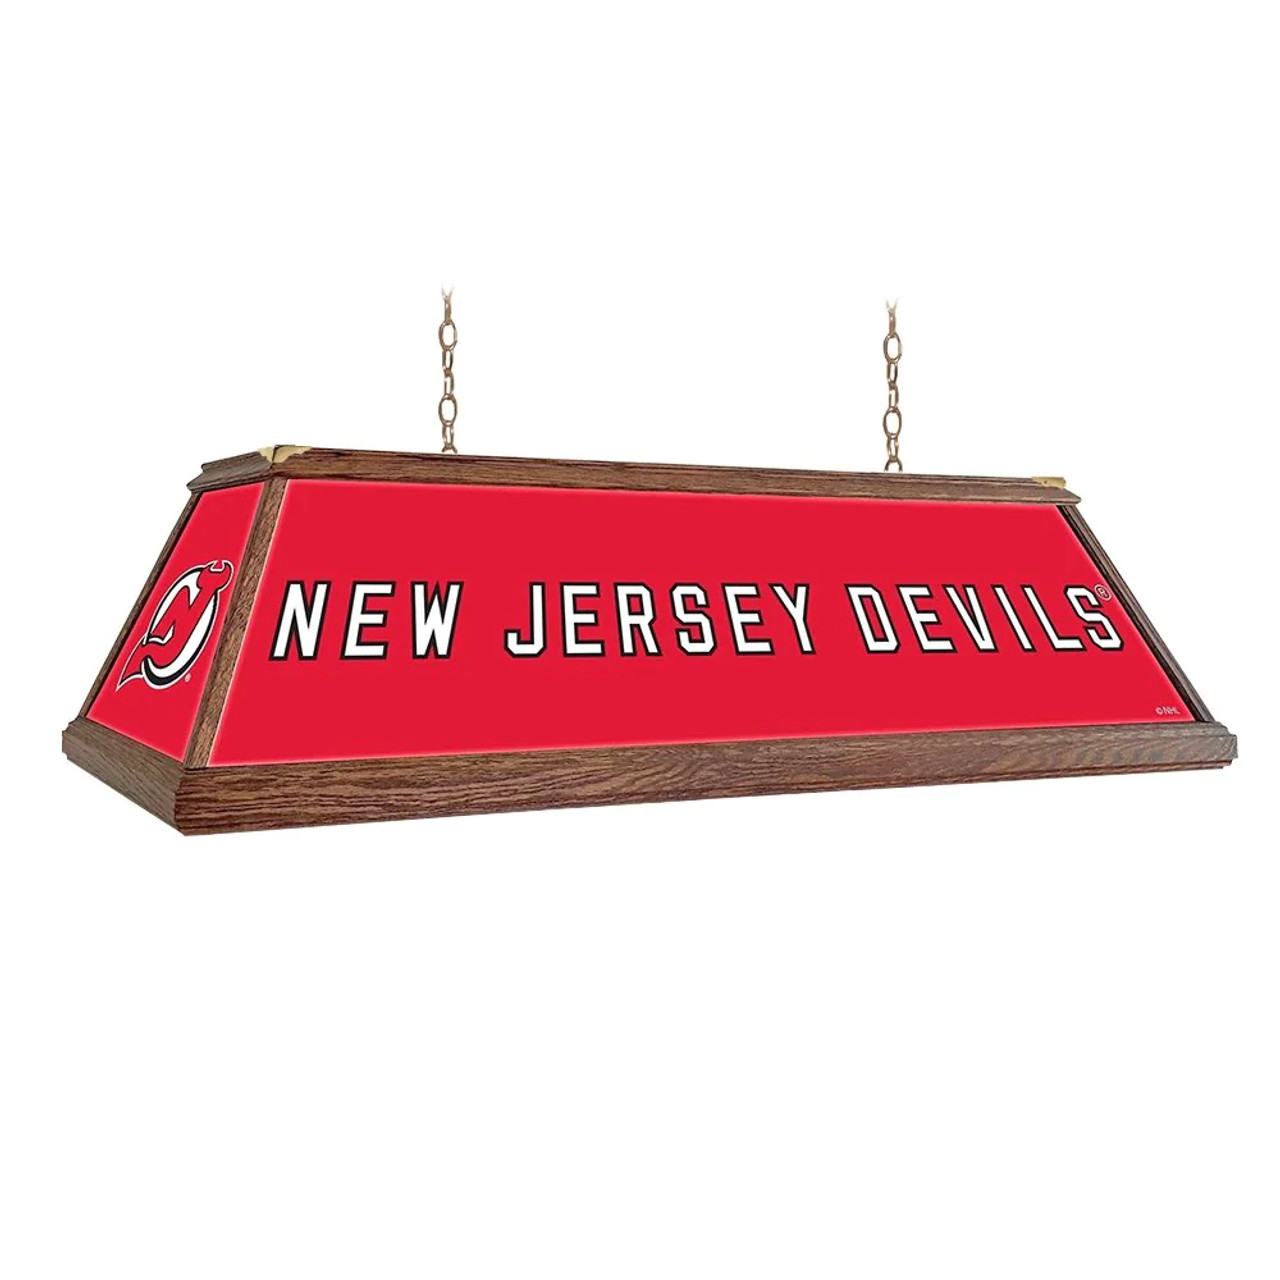 NJ, New Jersey, Devils, Premium Wood, 4-ft, Florescent, Wooden, Pool, Billiard, Table, Light, lamp, NHL, The Fan-Brand, 686082114554